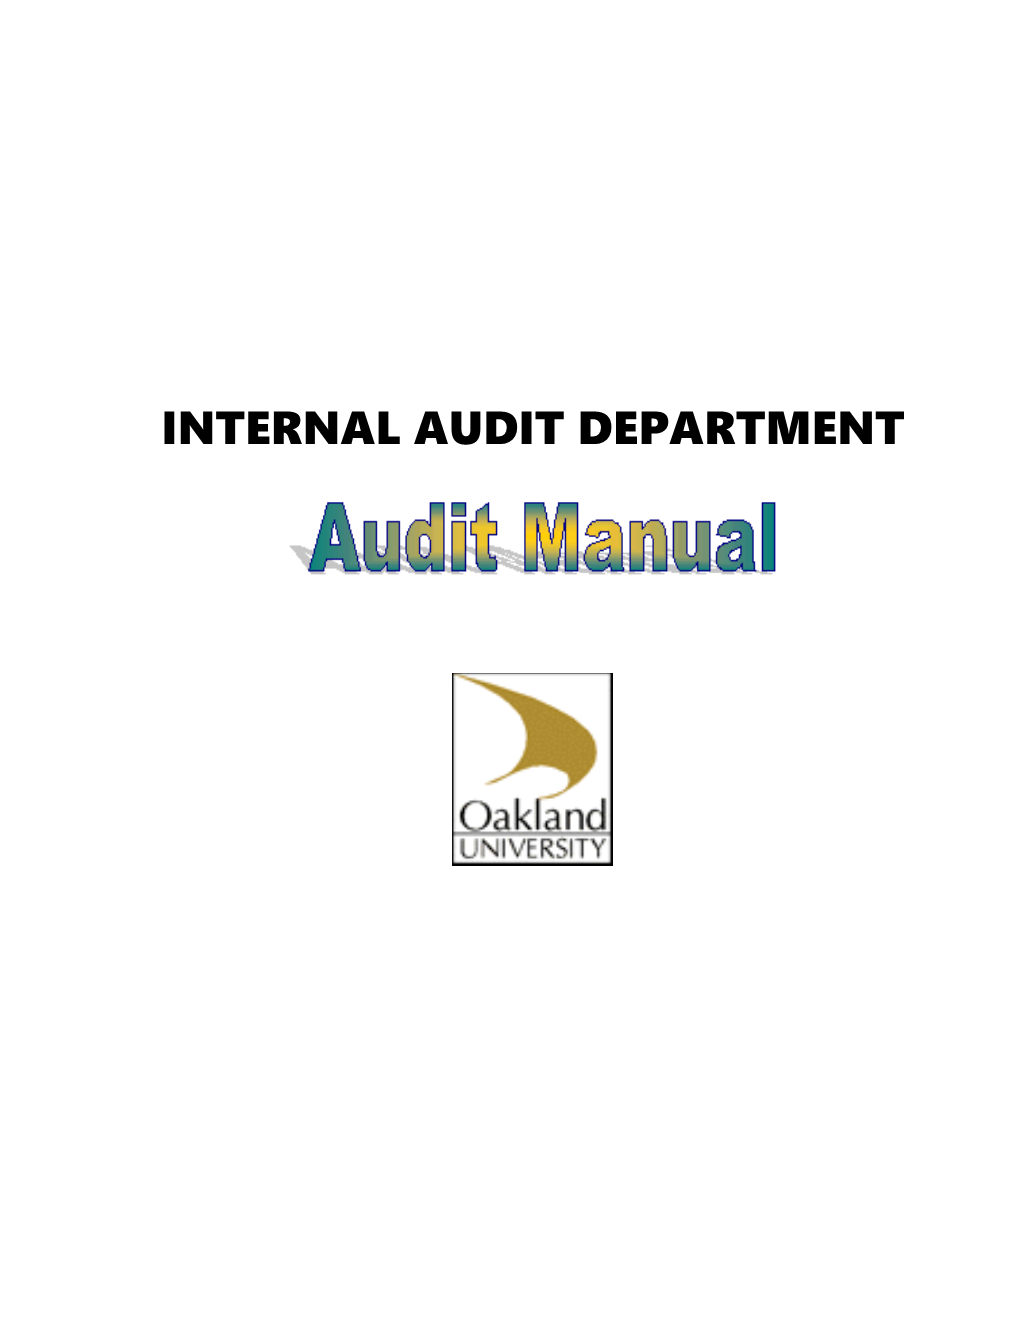 Internal Audit Department